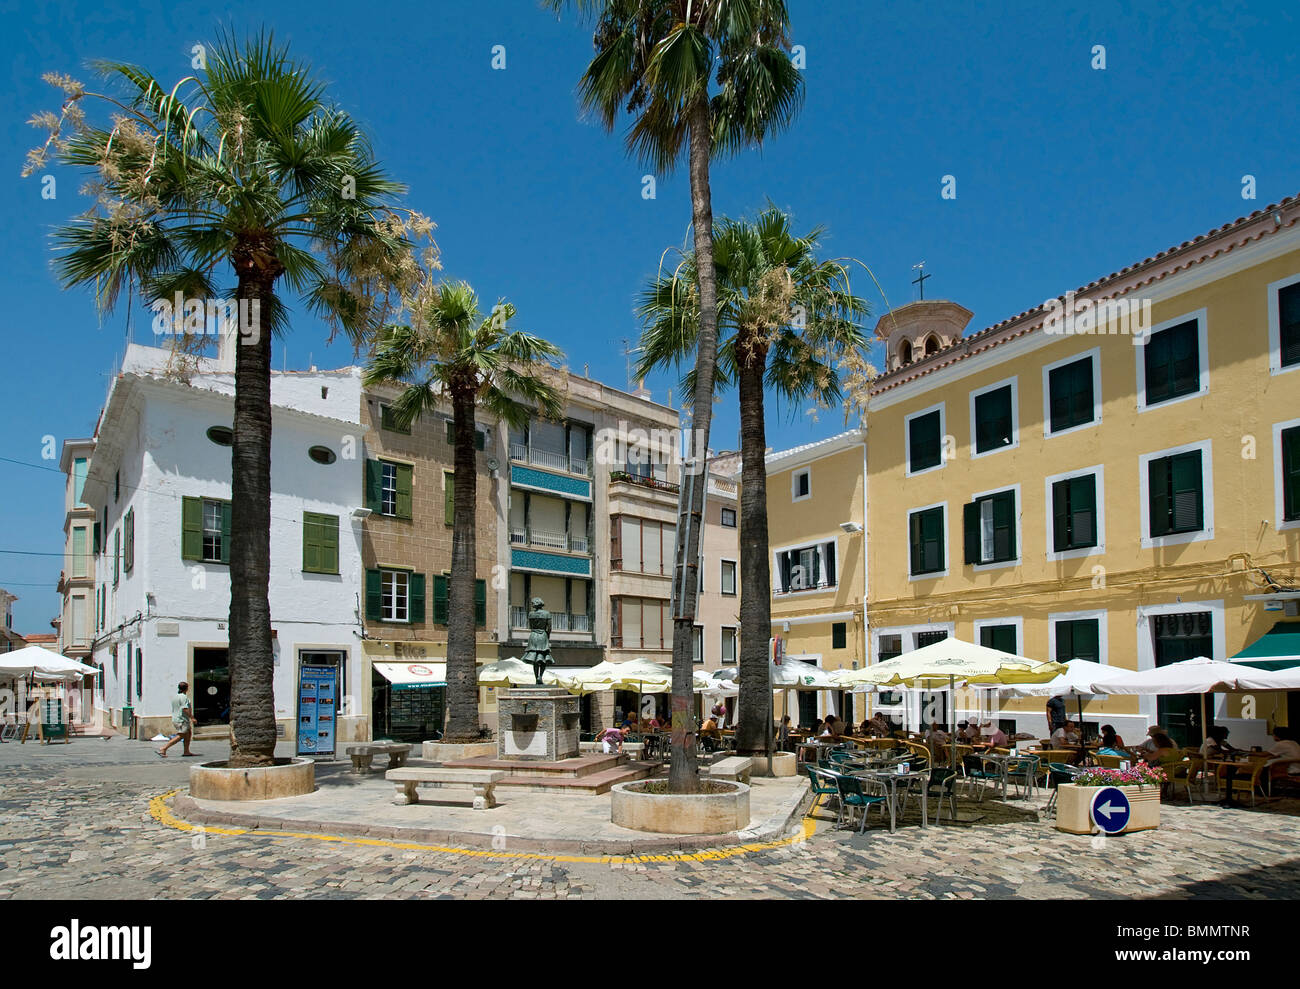 Pavement cafes in centre of Mahon, Menorca, Balearics, Spain Stock Photo